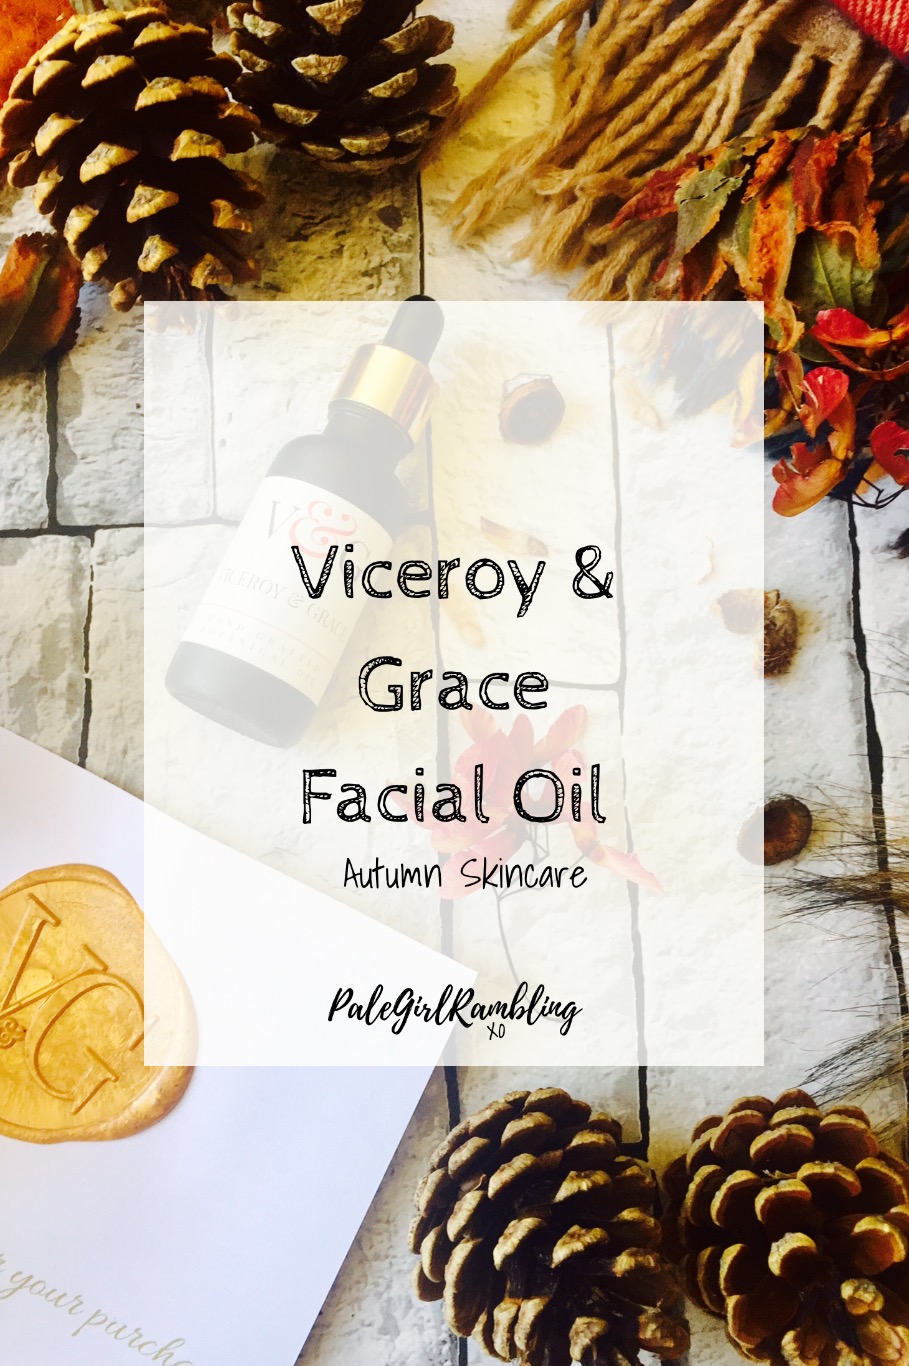 Viceroy Grace facial oil autumn skincare